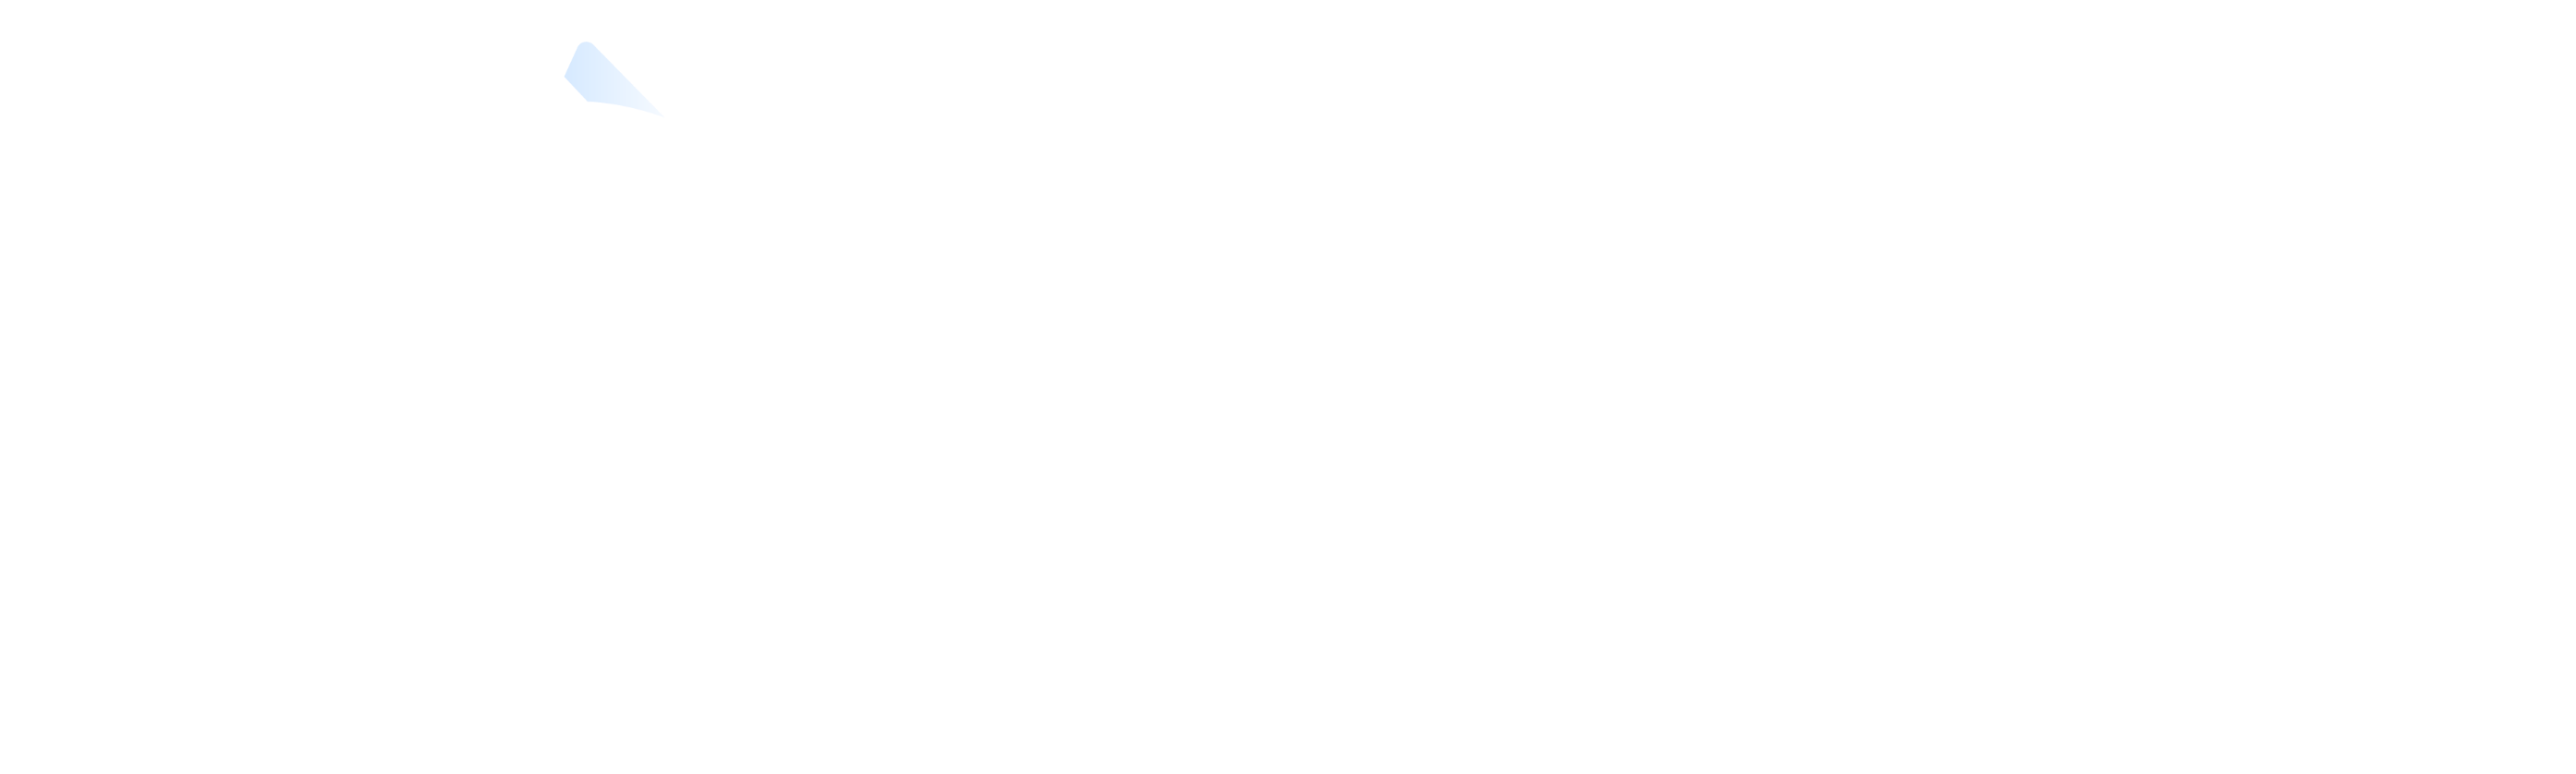 CBiBank信息中心